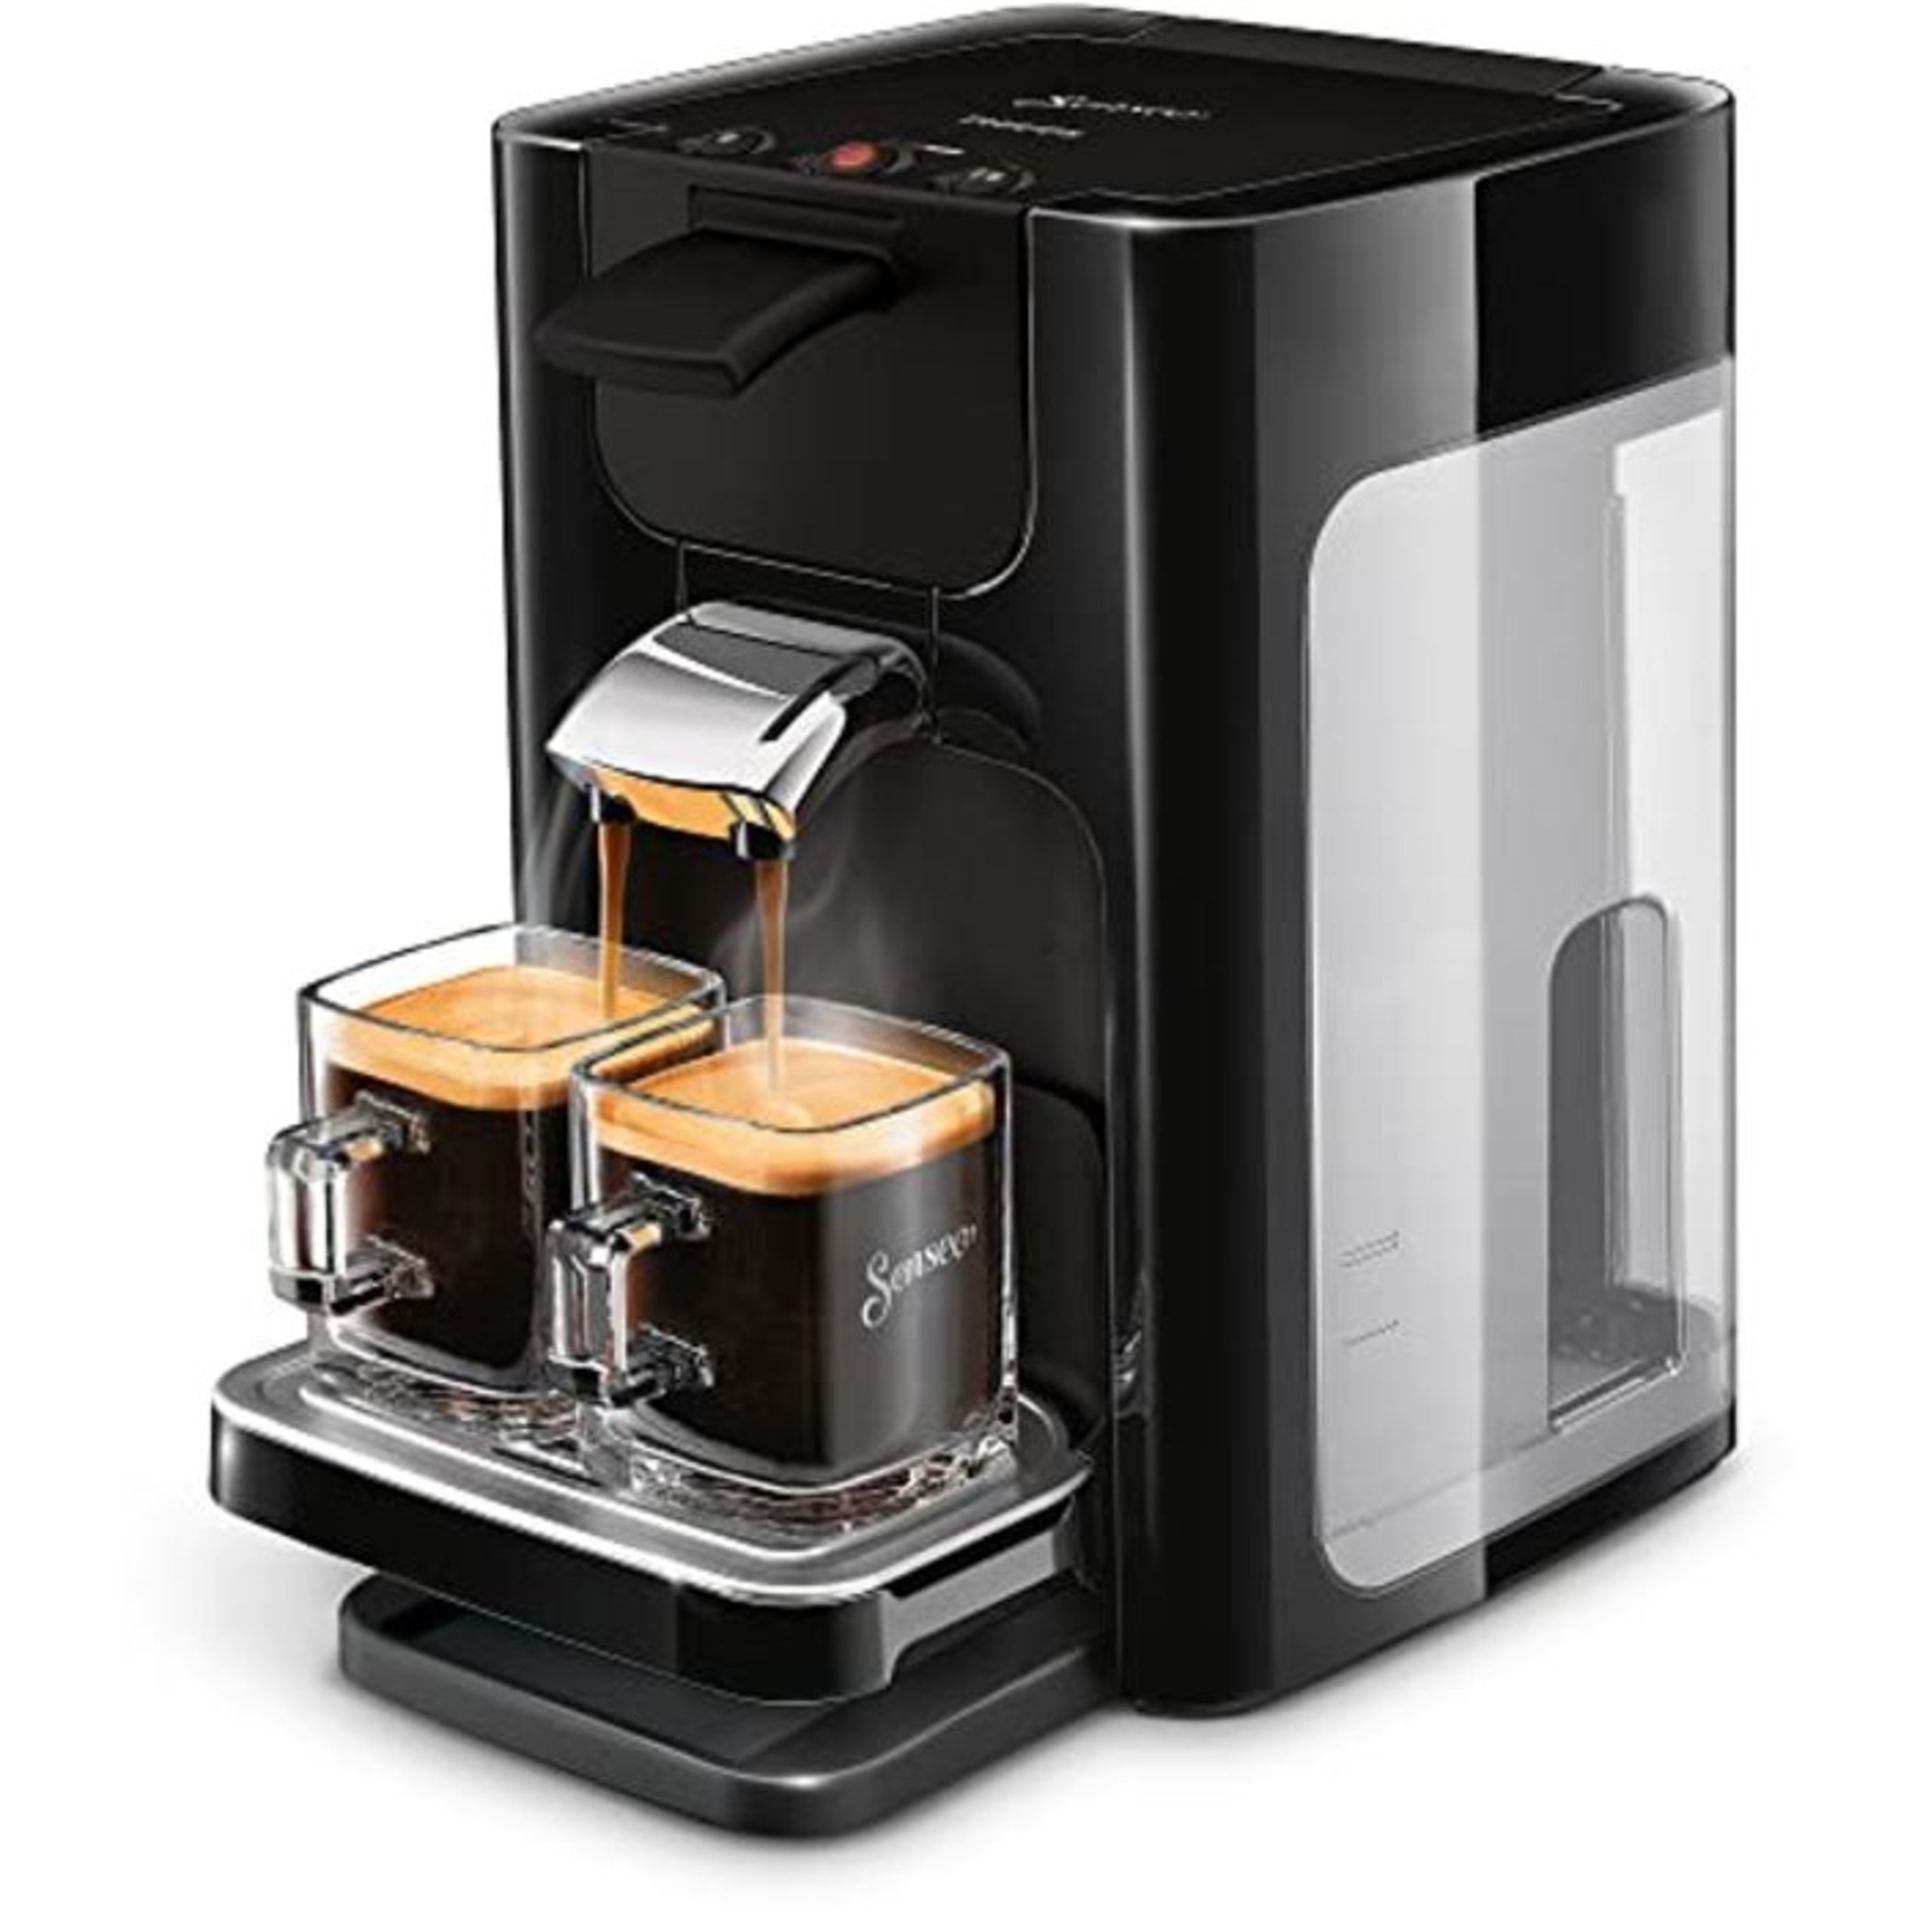 RRP £135.00 Senseo Quadrante hd7865/60 Coffee Machine in Capsules 1.2L 8 Cups Black - Coffee (